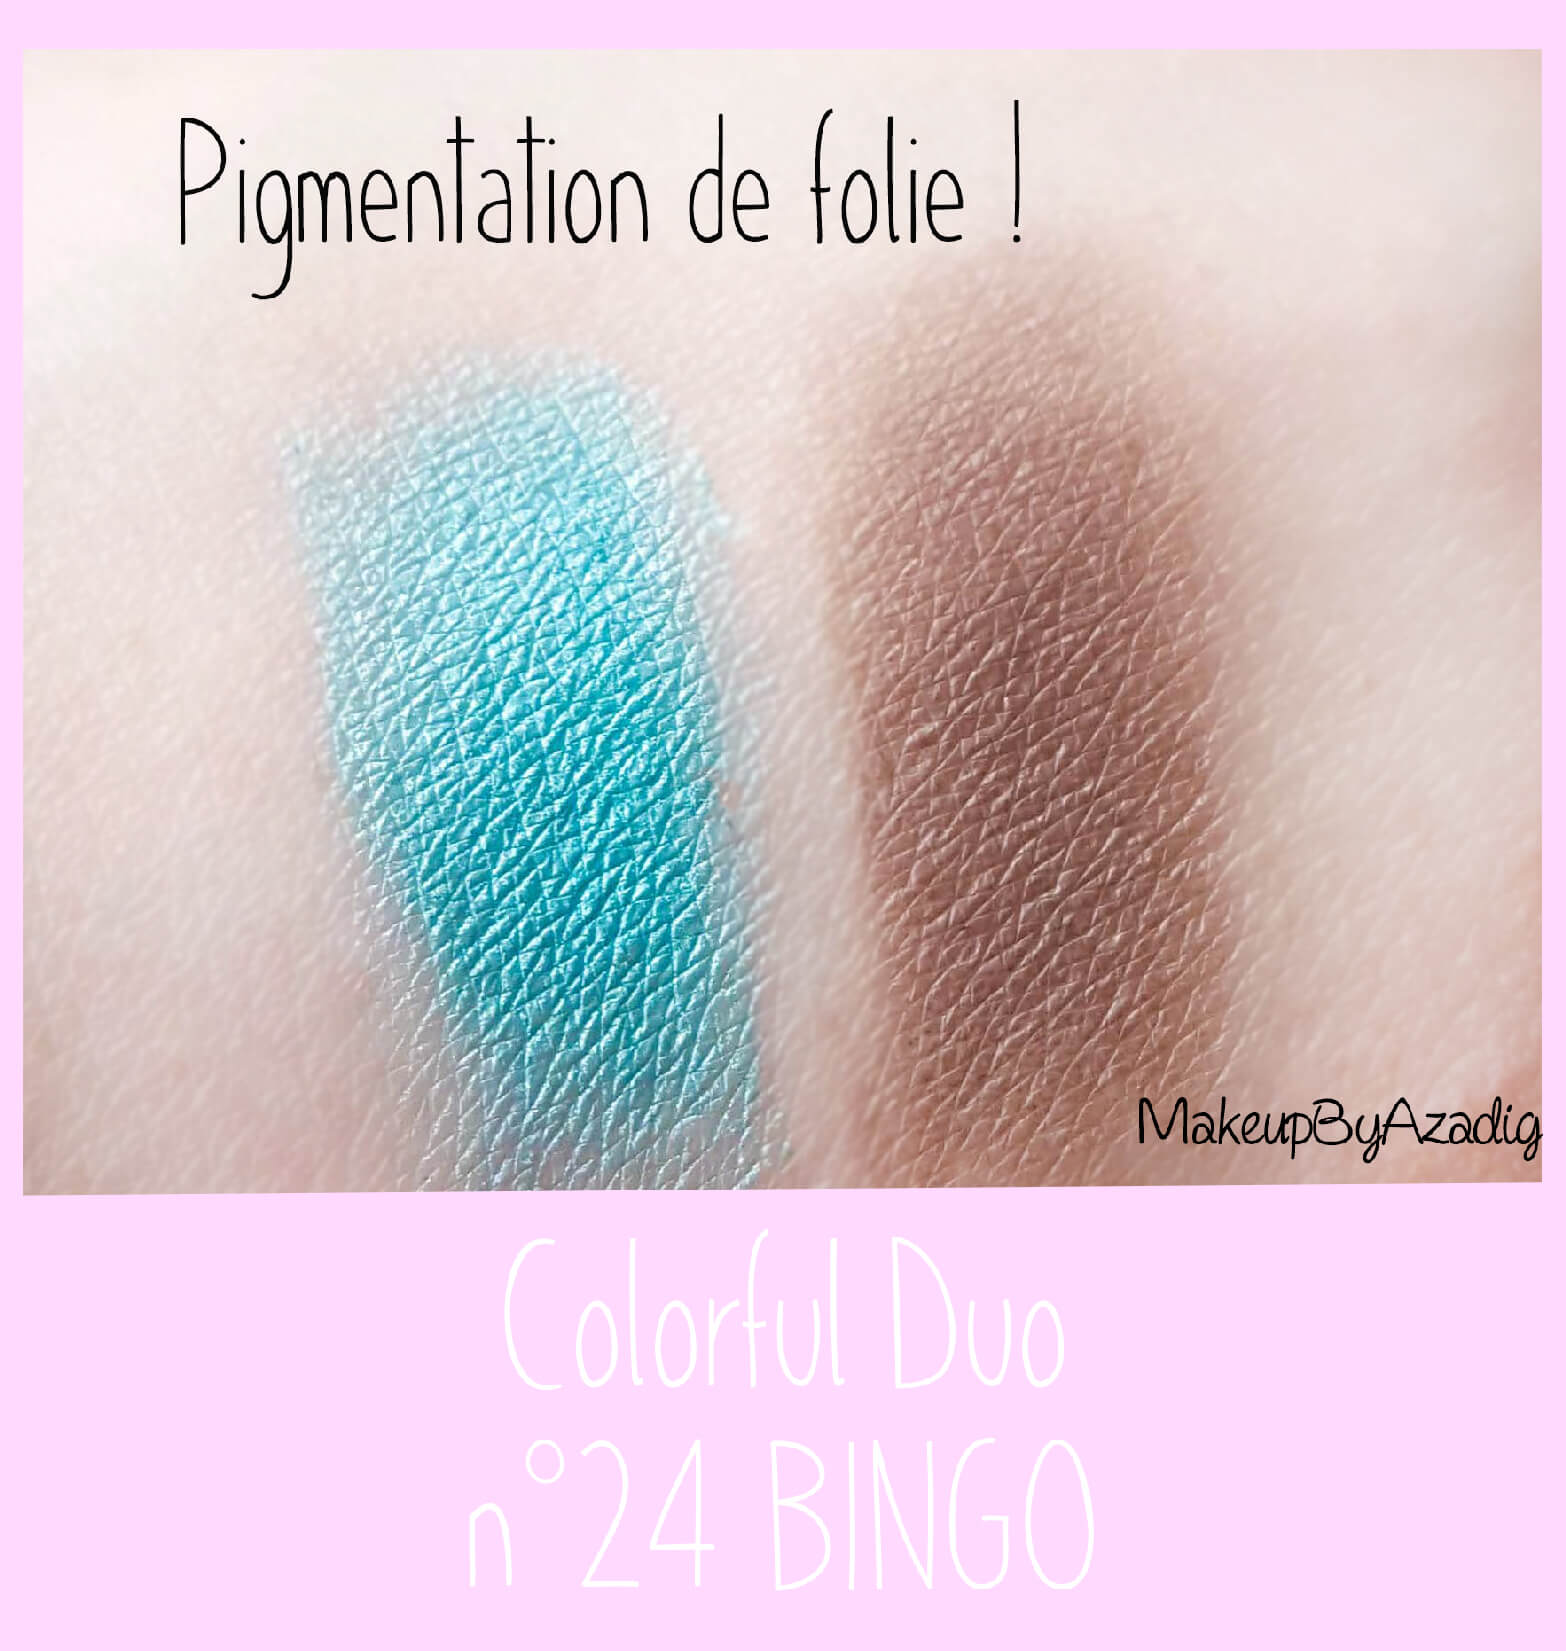 swatches-bingo-colorful-duo-ombres-a-paupieres-sephora-madeinsephora-hivency-partenariat-makeupbyazadig